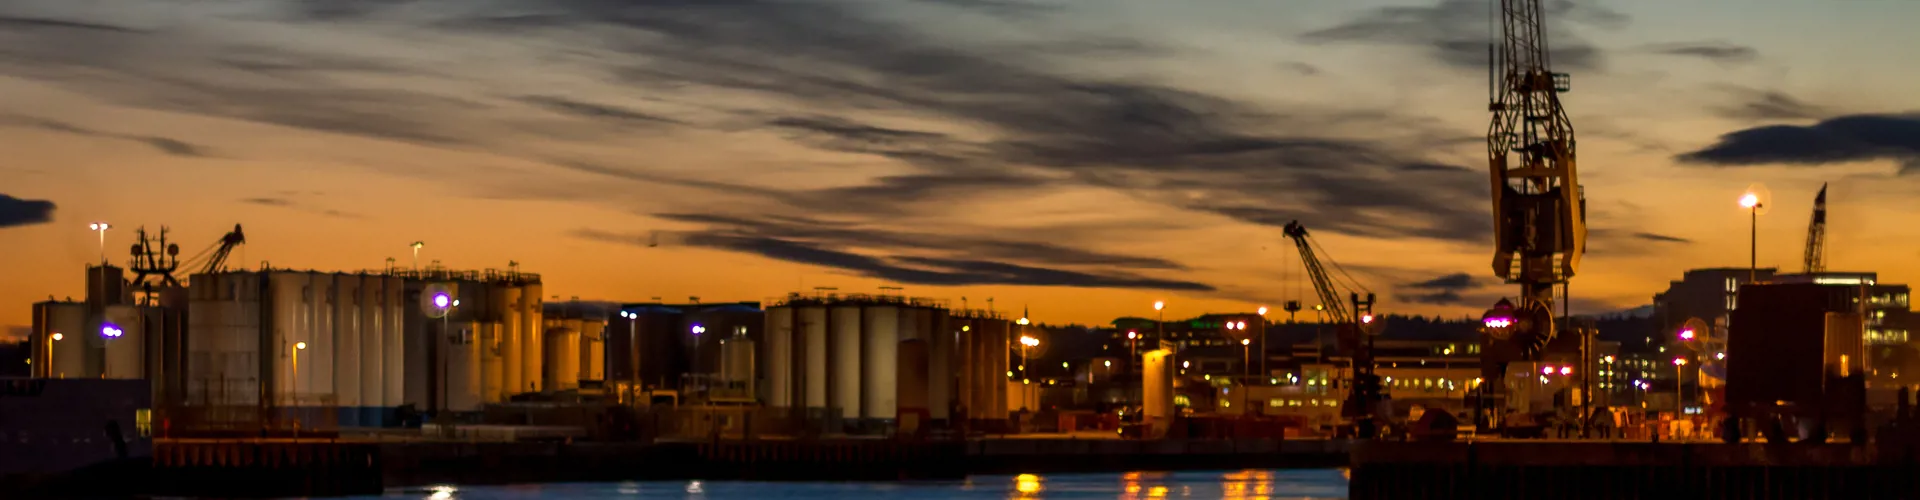 Aberdeen Harbour at Sunset